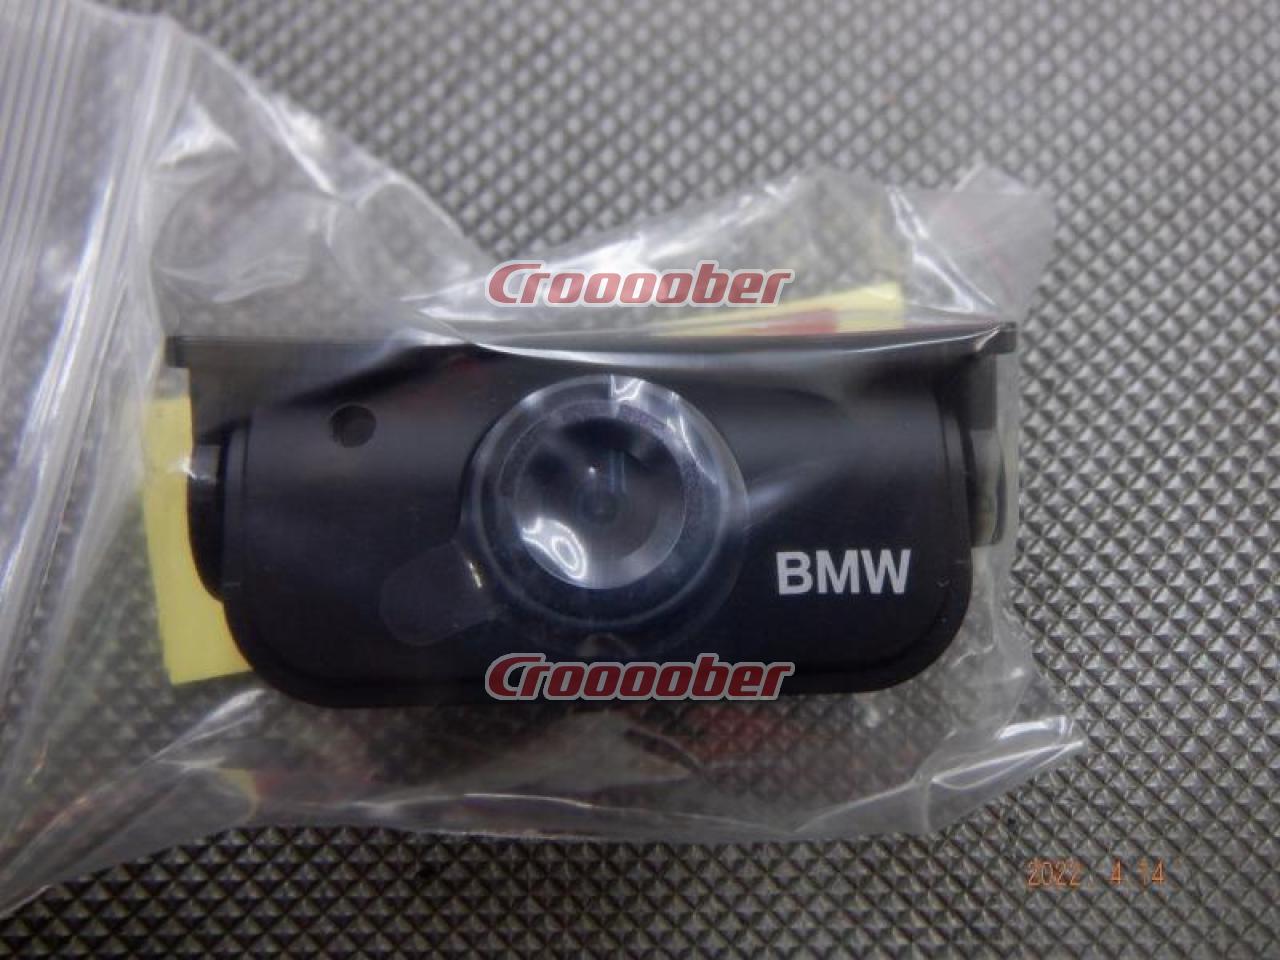 BMW純正 ドライブレコーダー 品番:6590-5A1E-7C6 TCL製 | カーAV